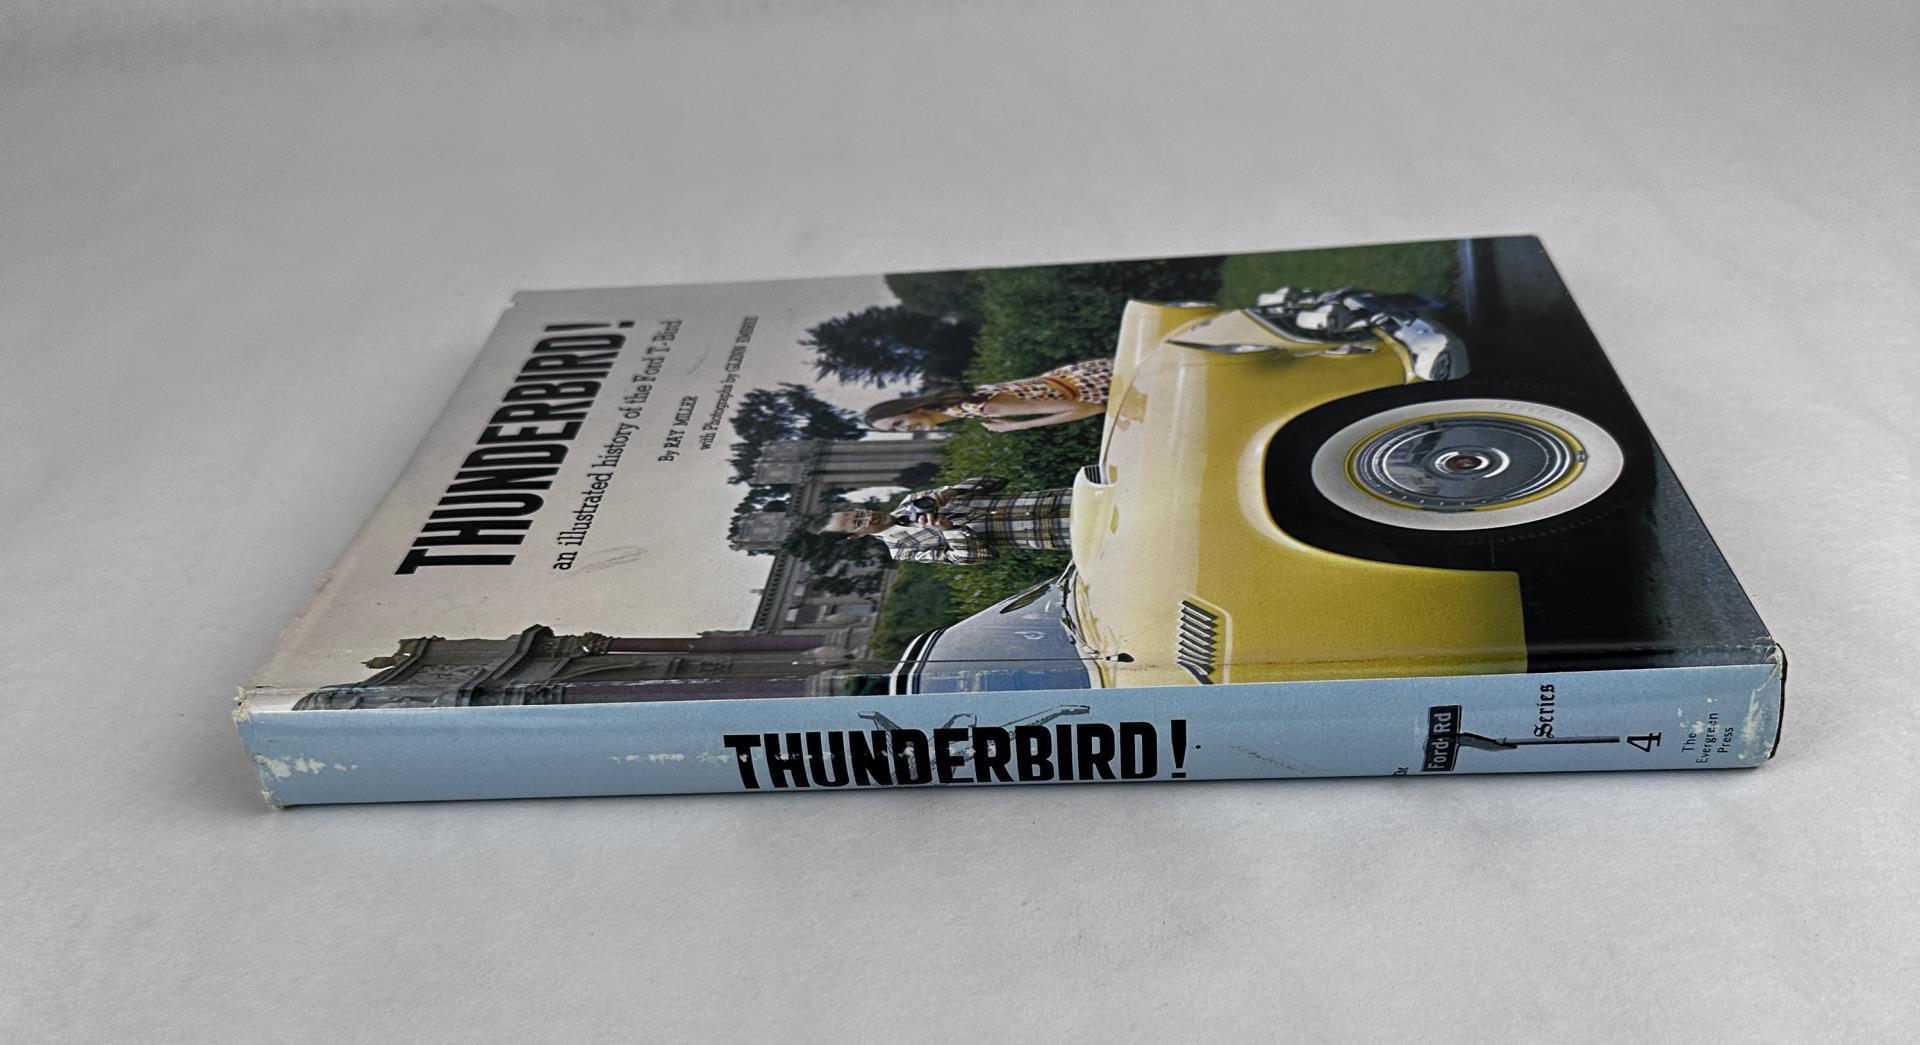 Thunderbird an Illustrated History Ford T Bird